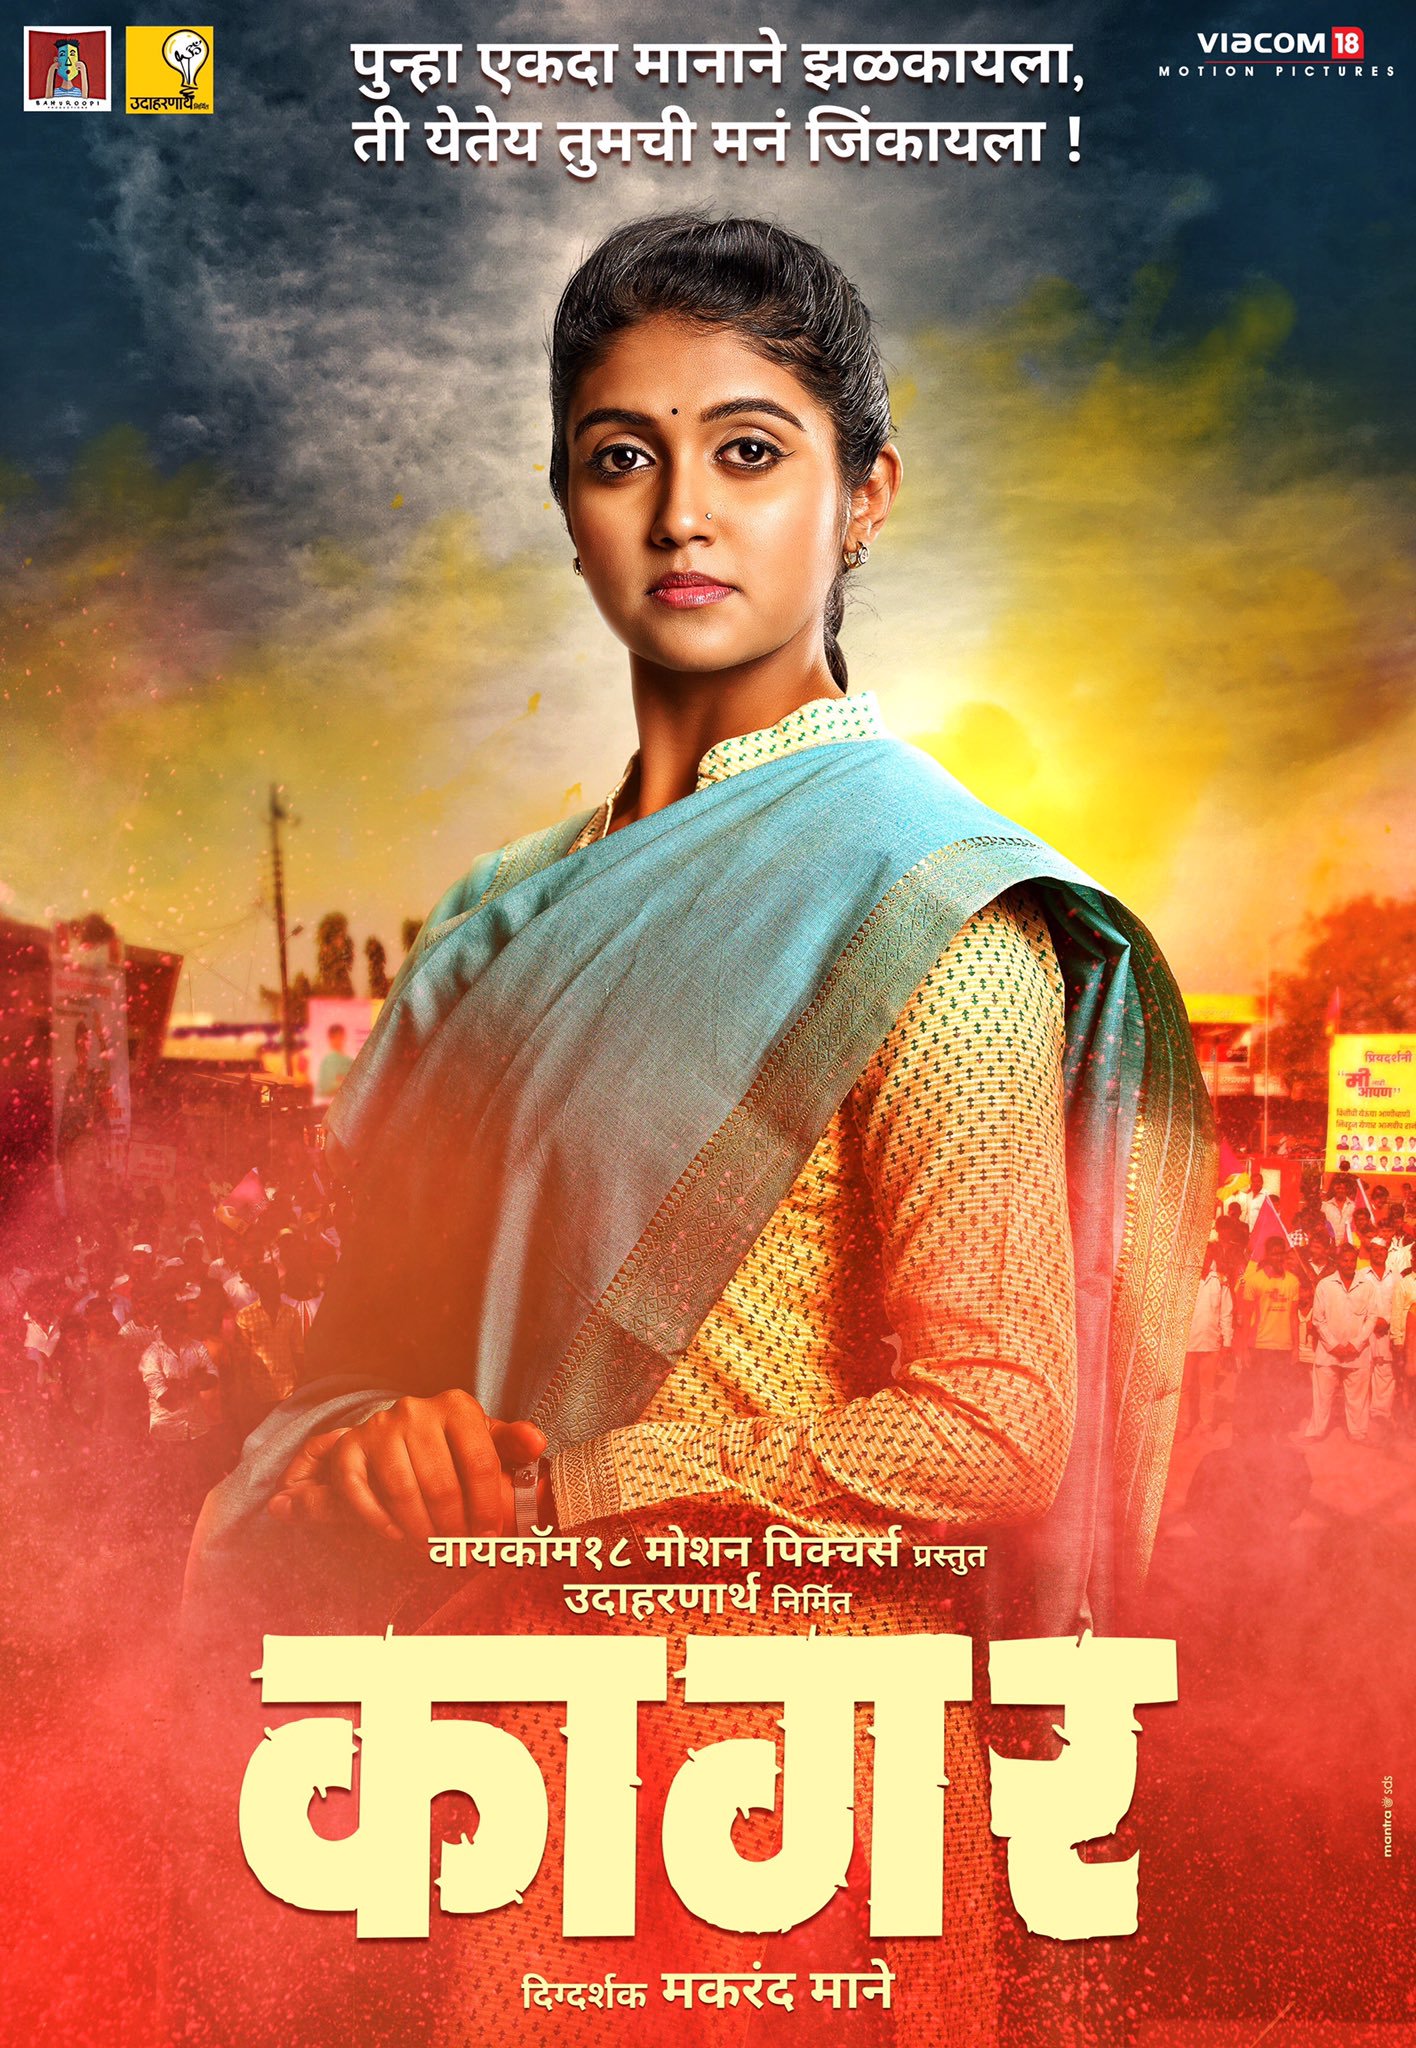 Kagar Marathi Movie Poster - 1416x2048 Wallpaper 